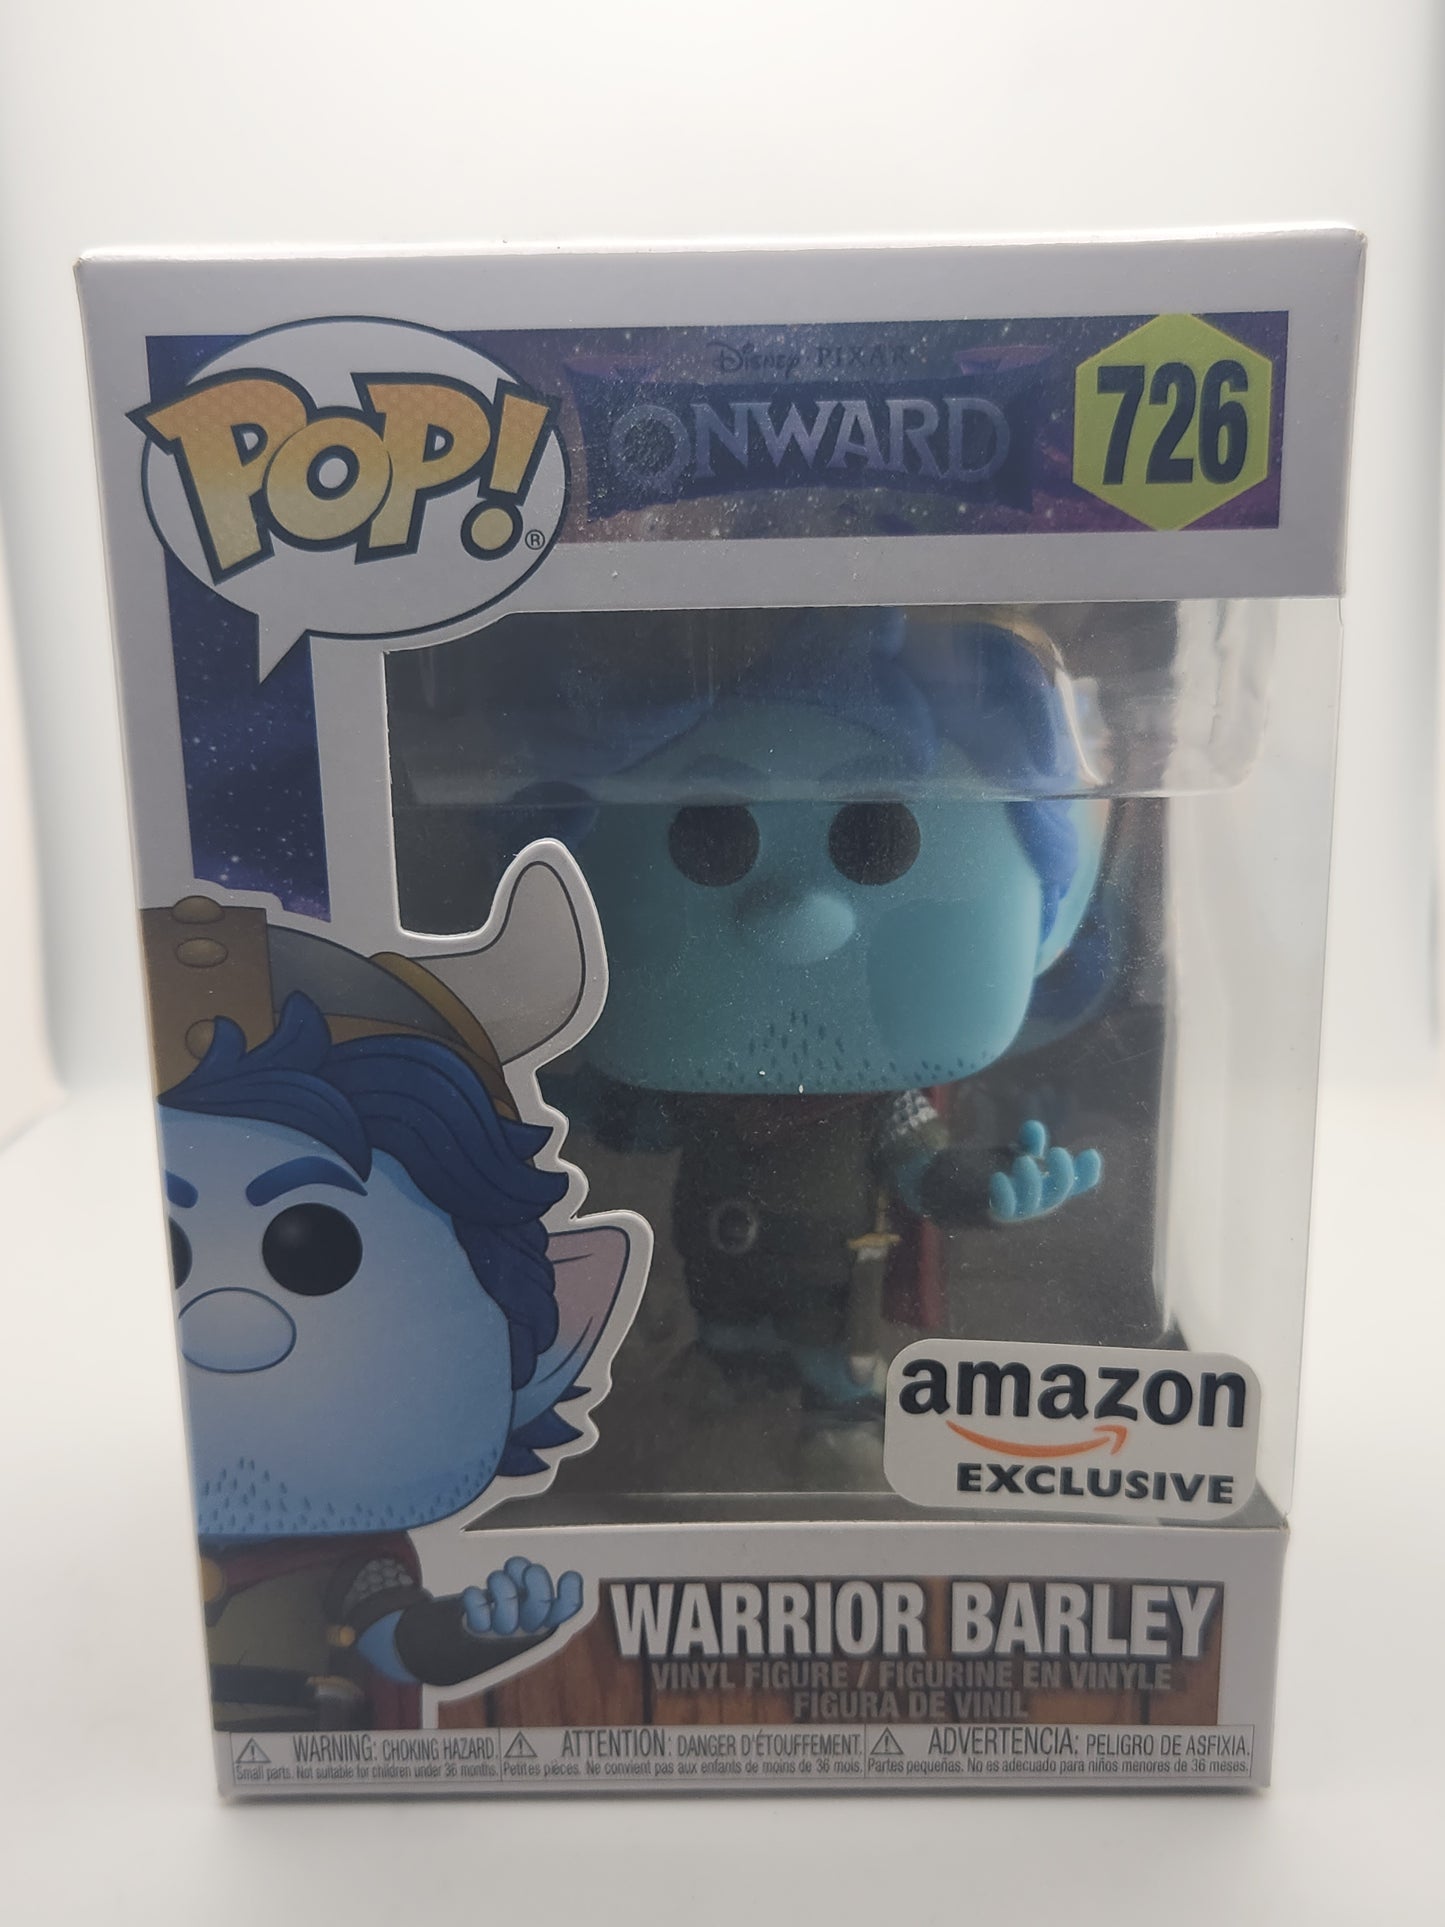 Warrior Barley - #726 - Box Condition 9/10